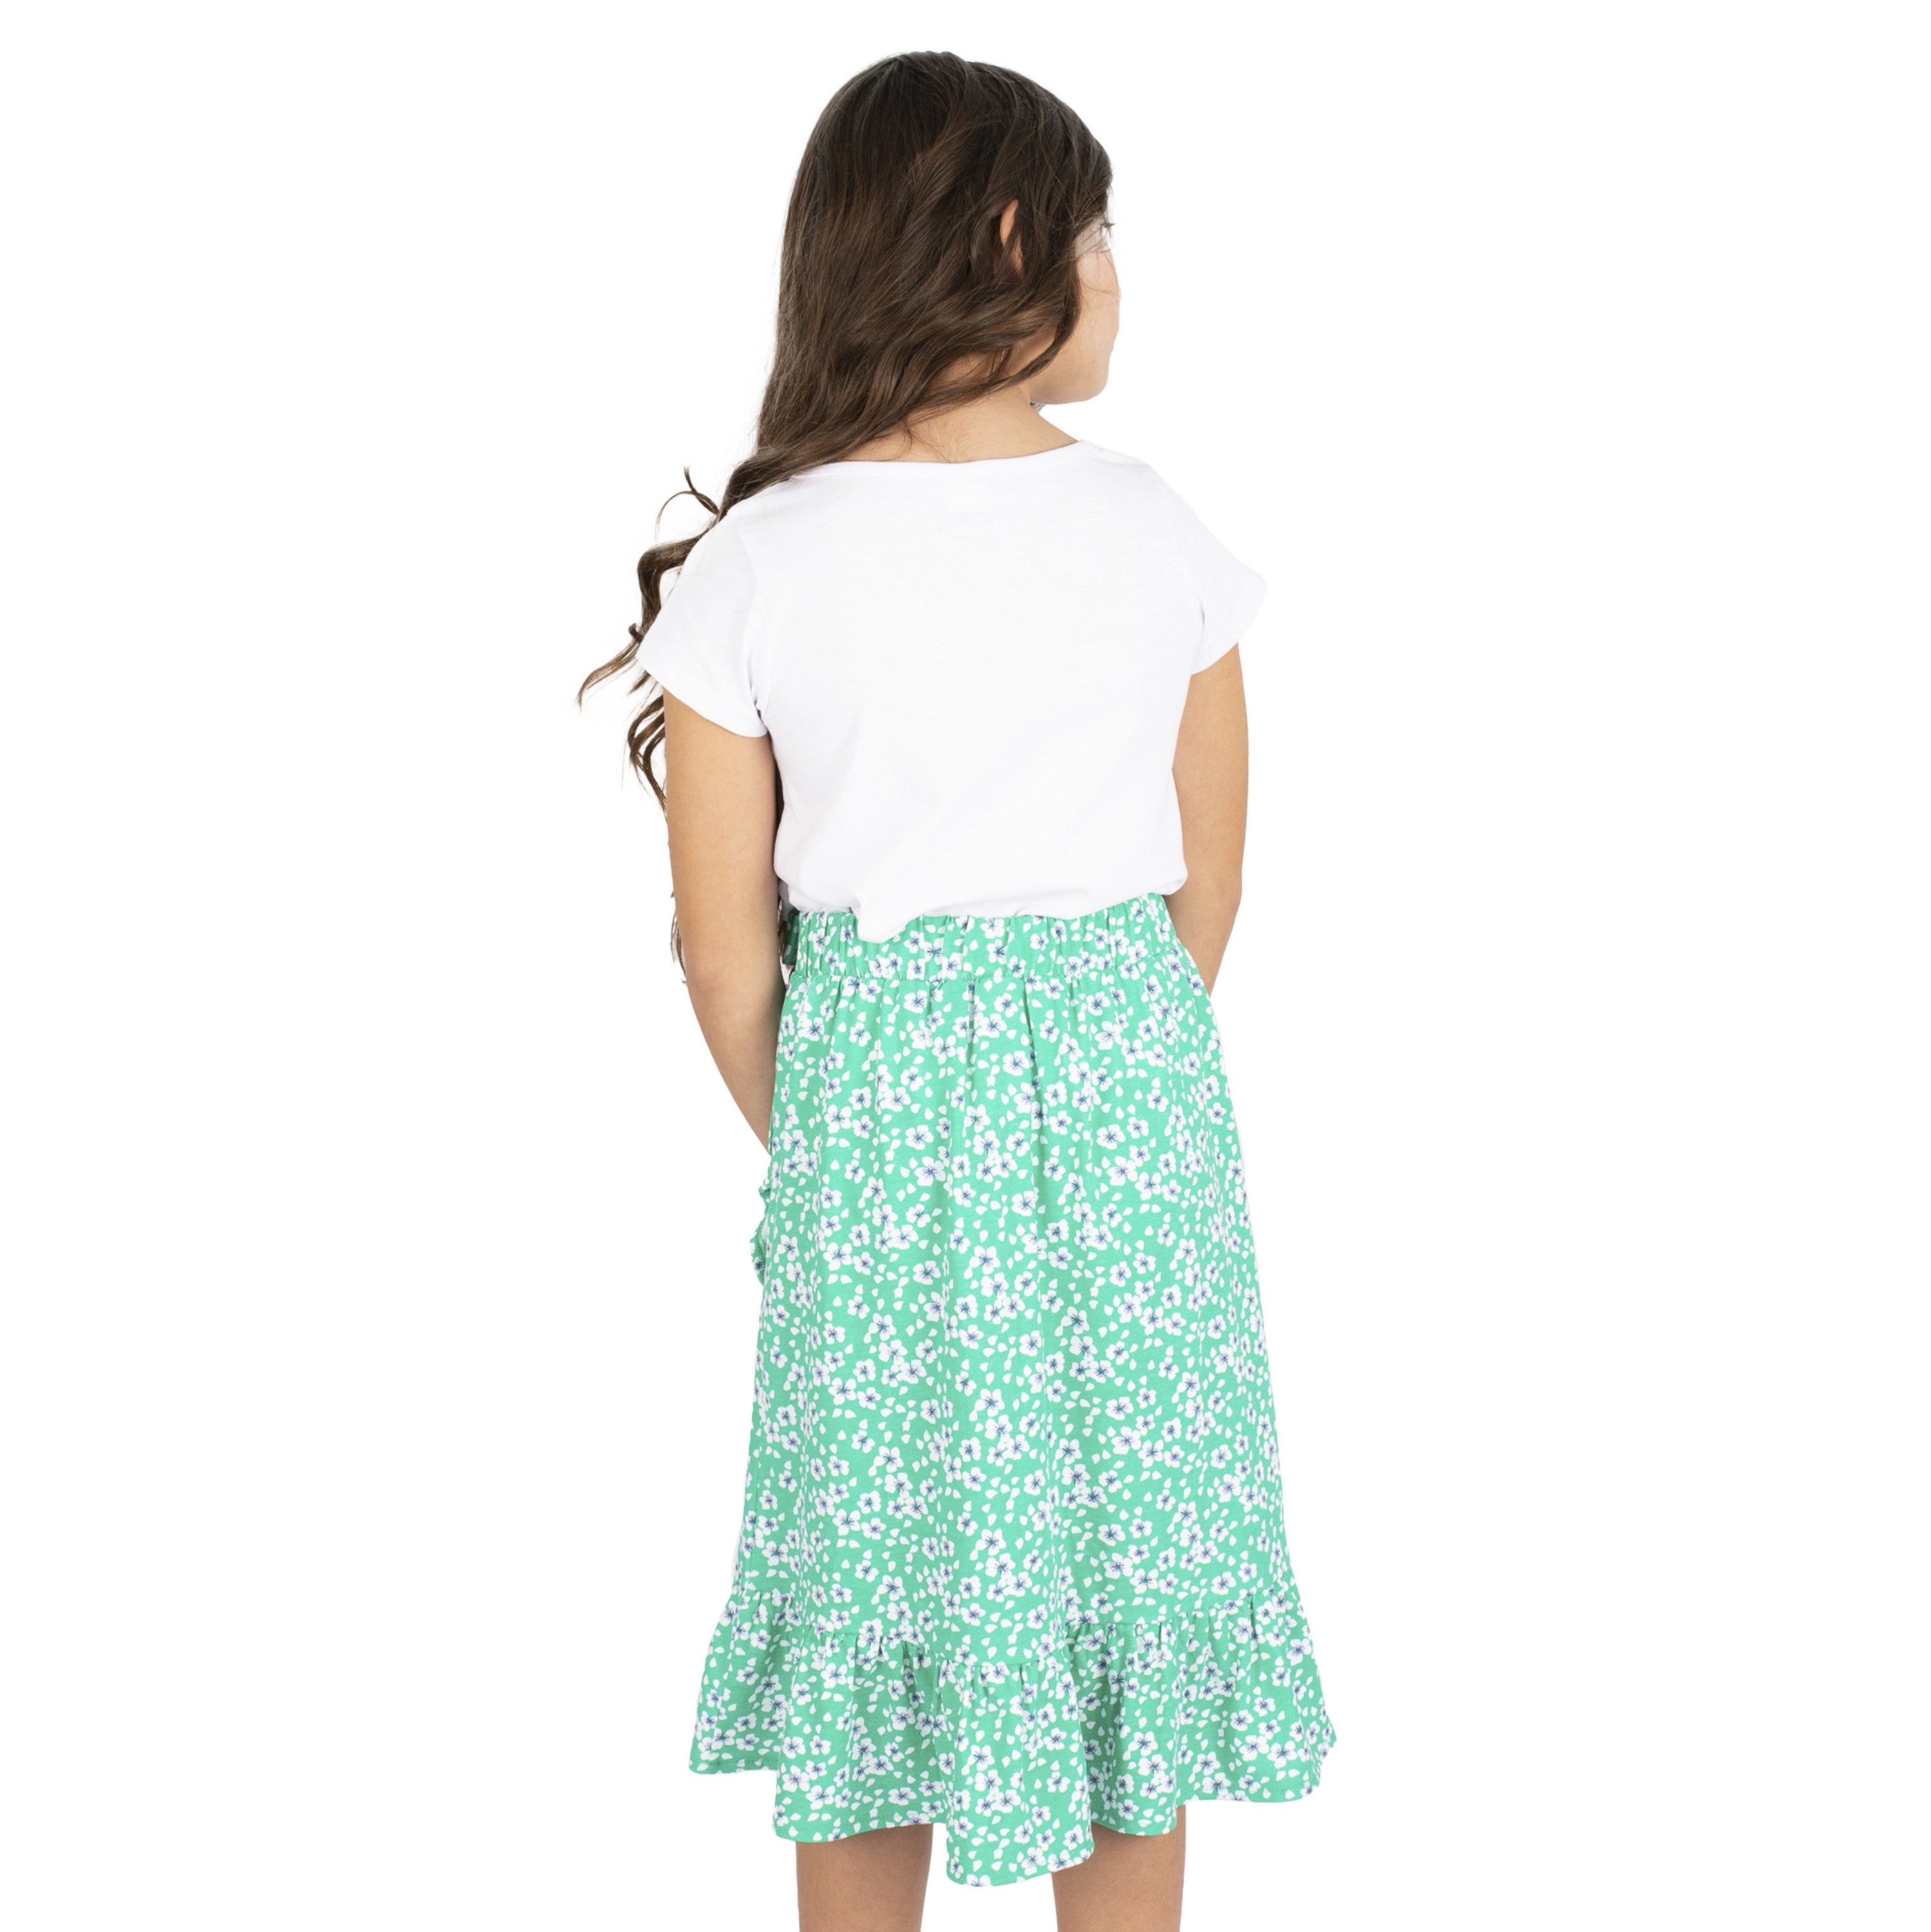 Falda de niña estampado VERANO/Outlet